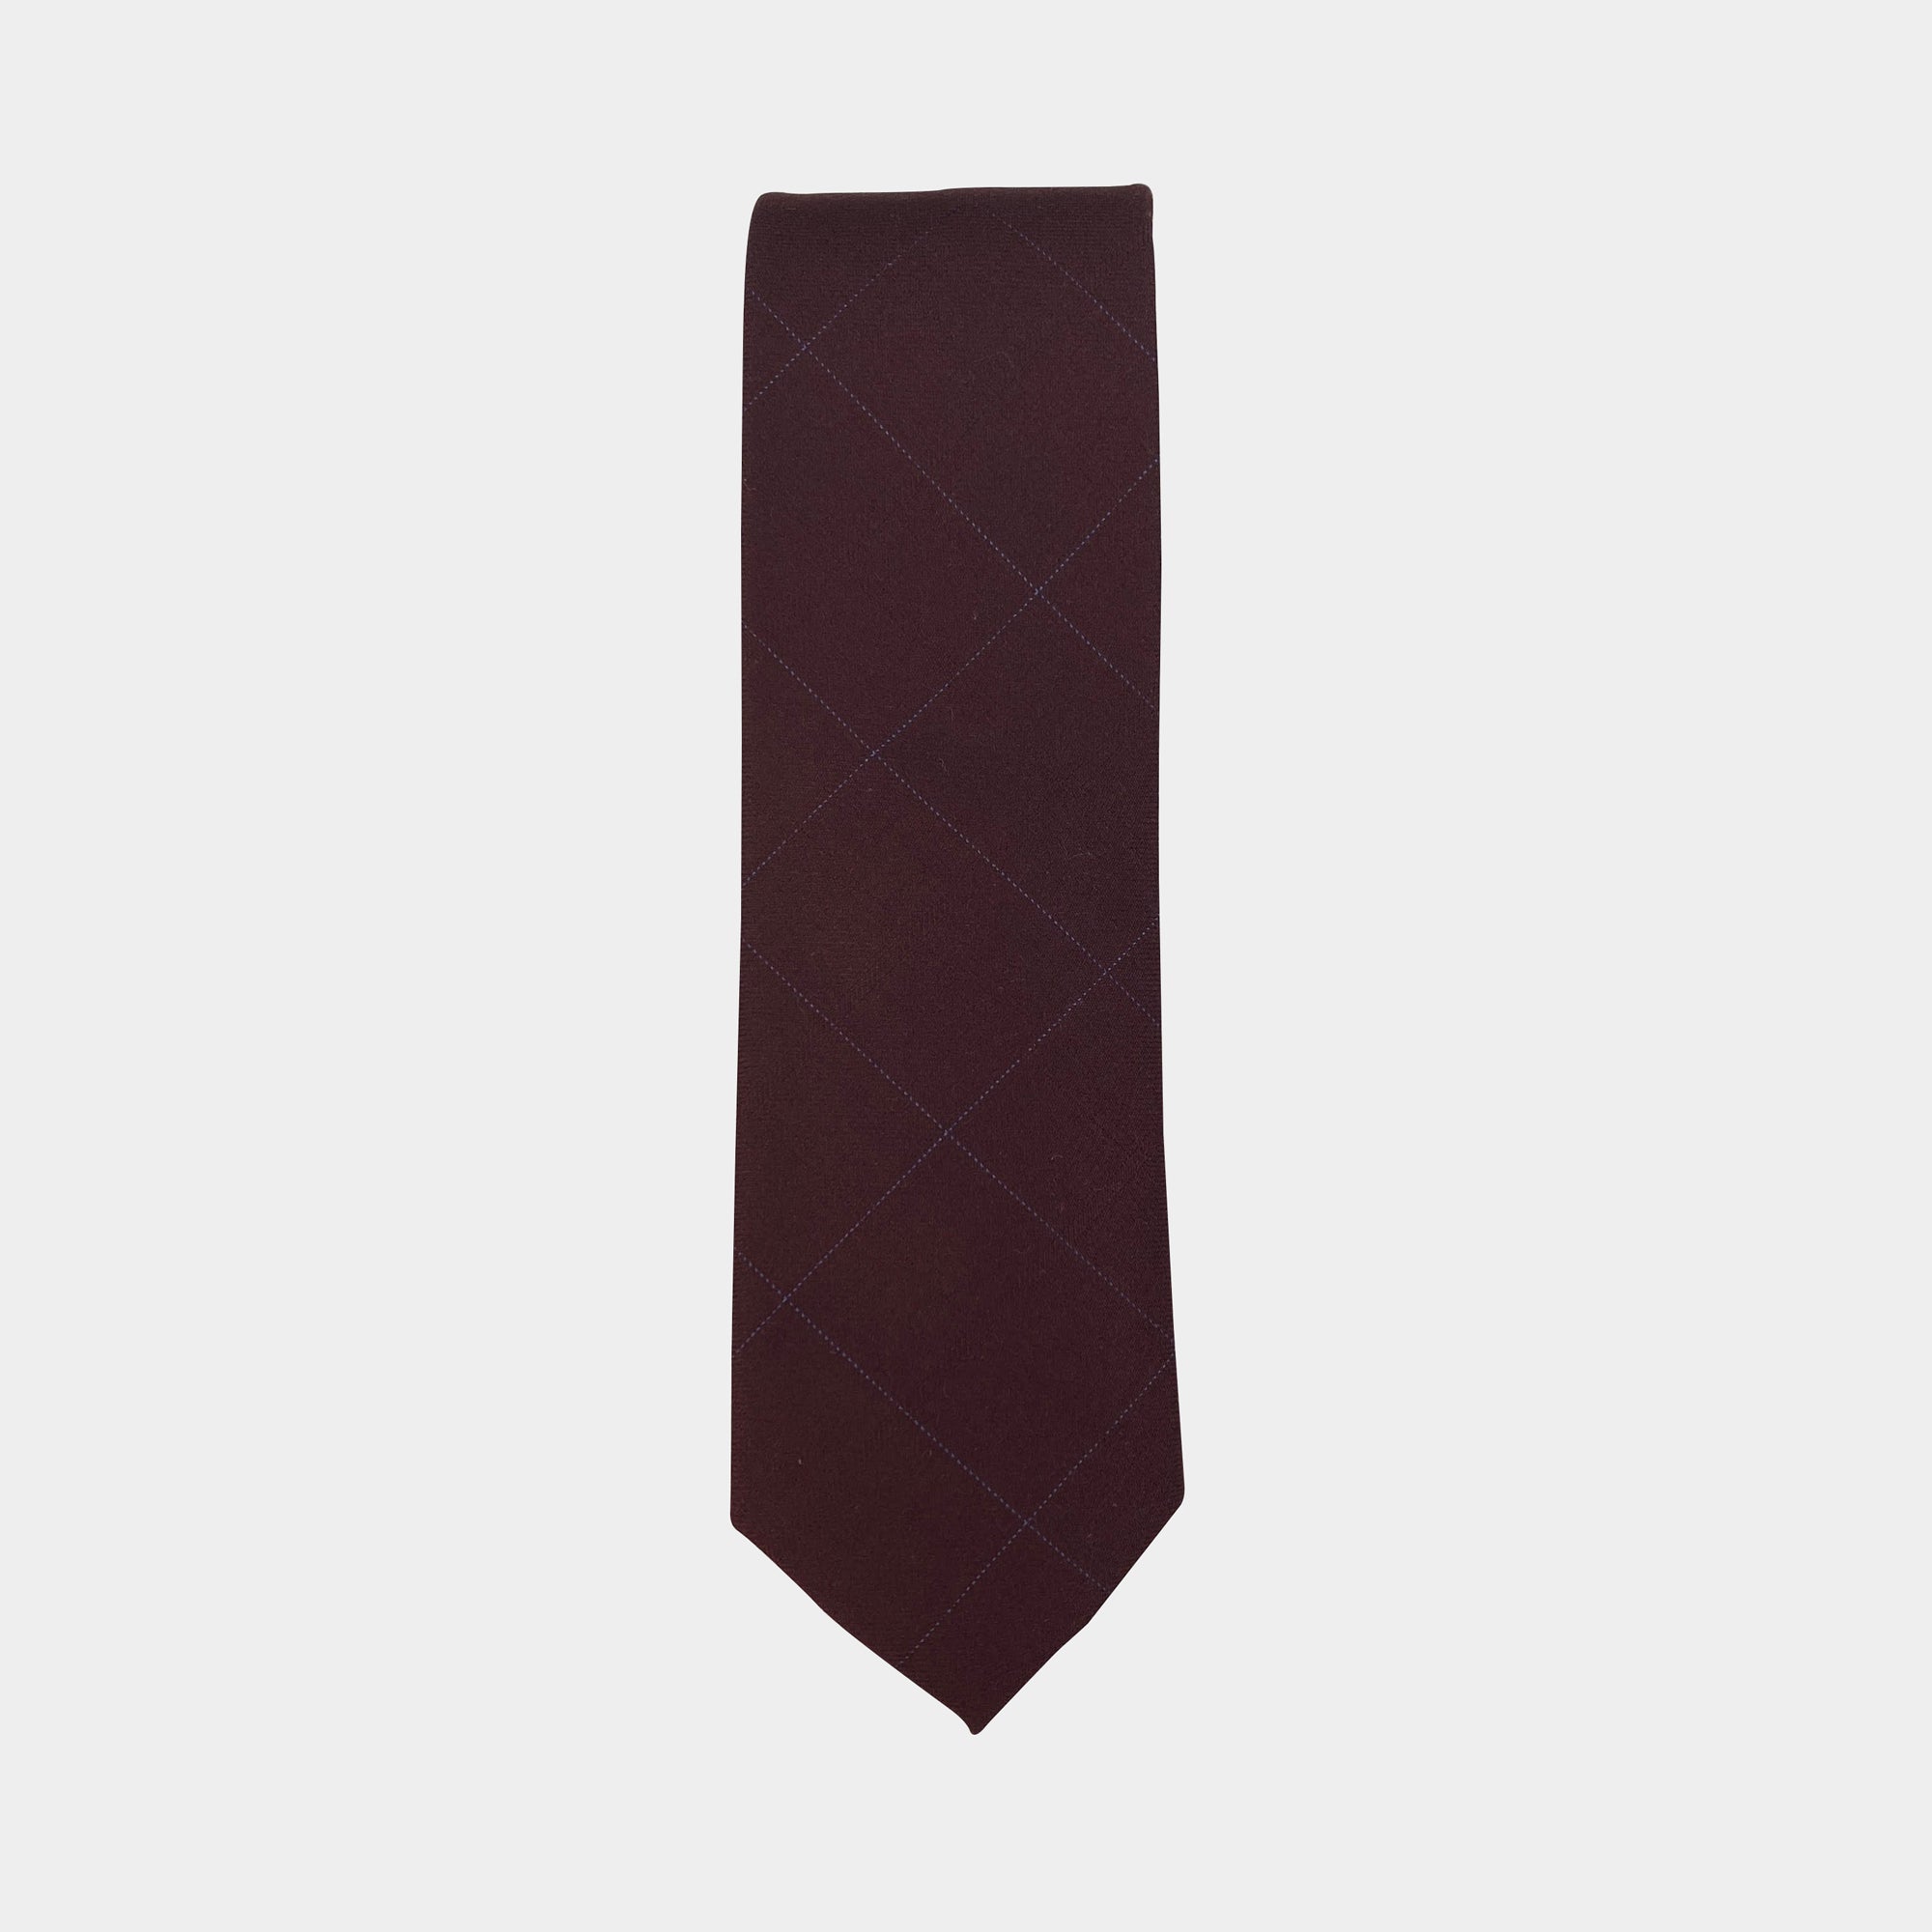 BRAUN - Men's Tie